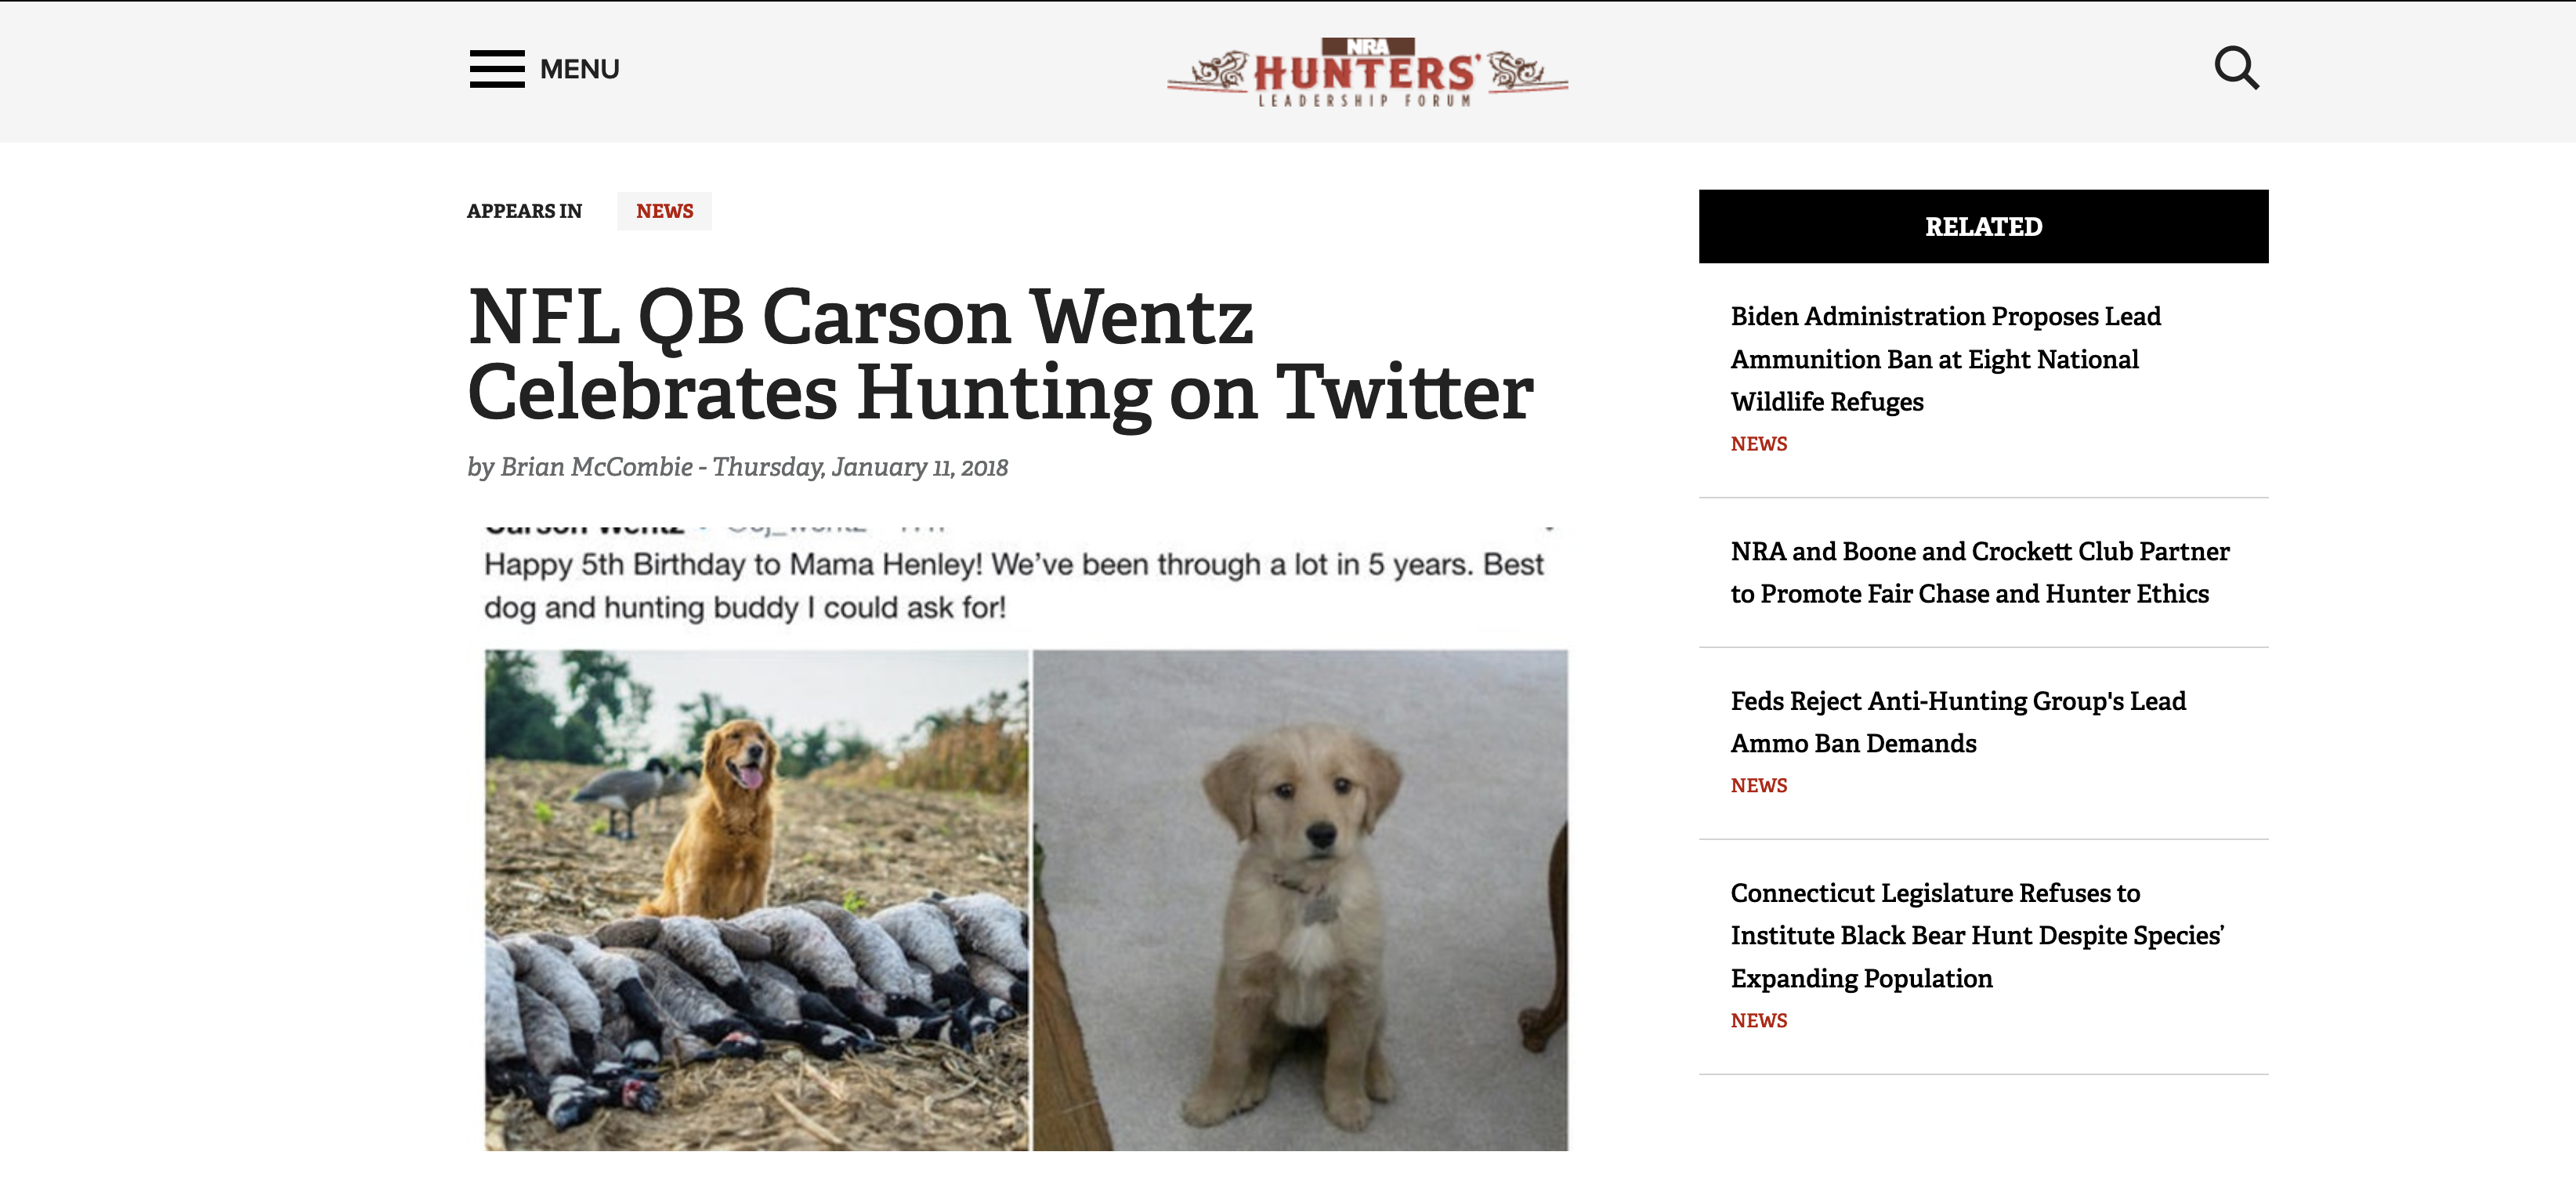 screenshot of nra half story online regarding Carson went's dog